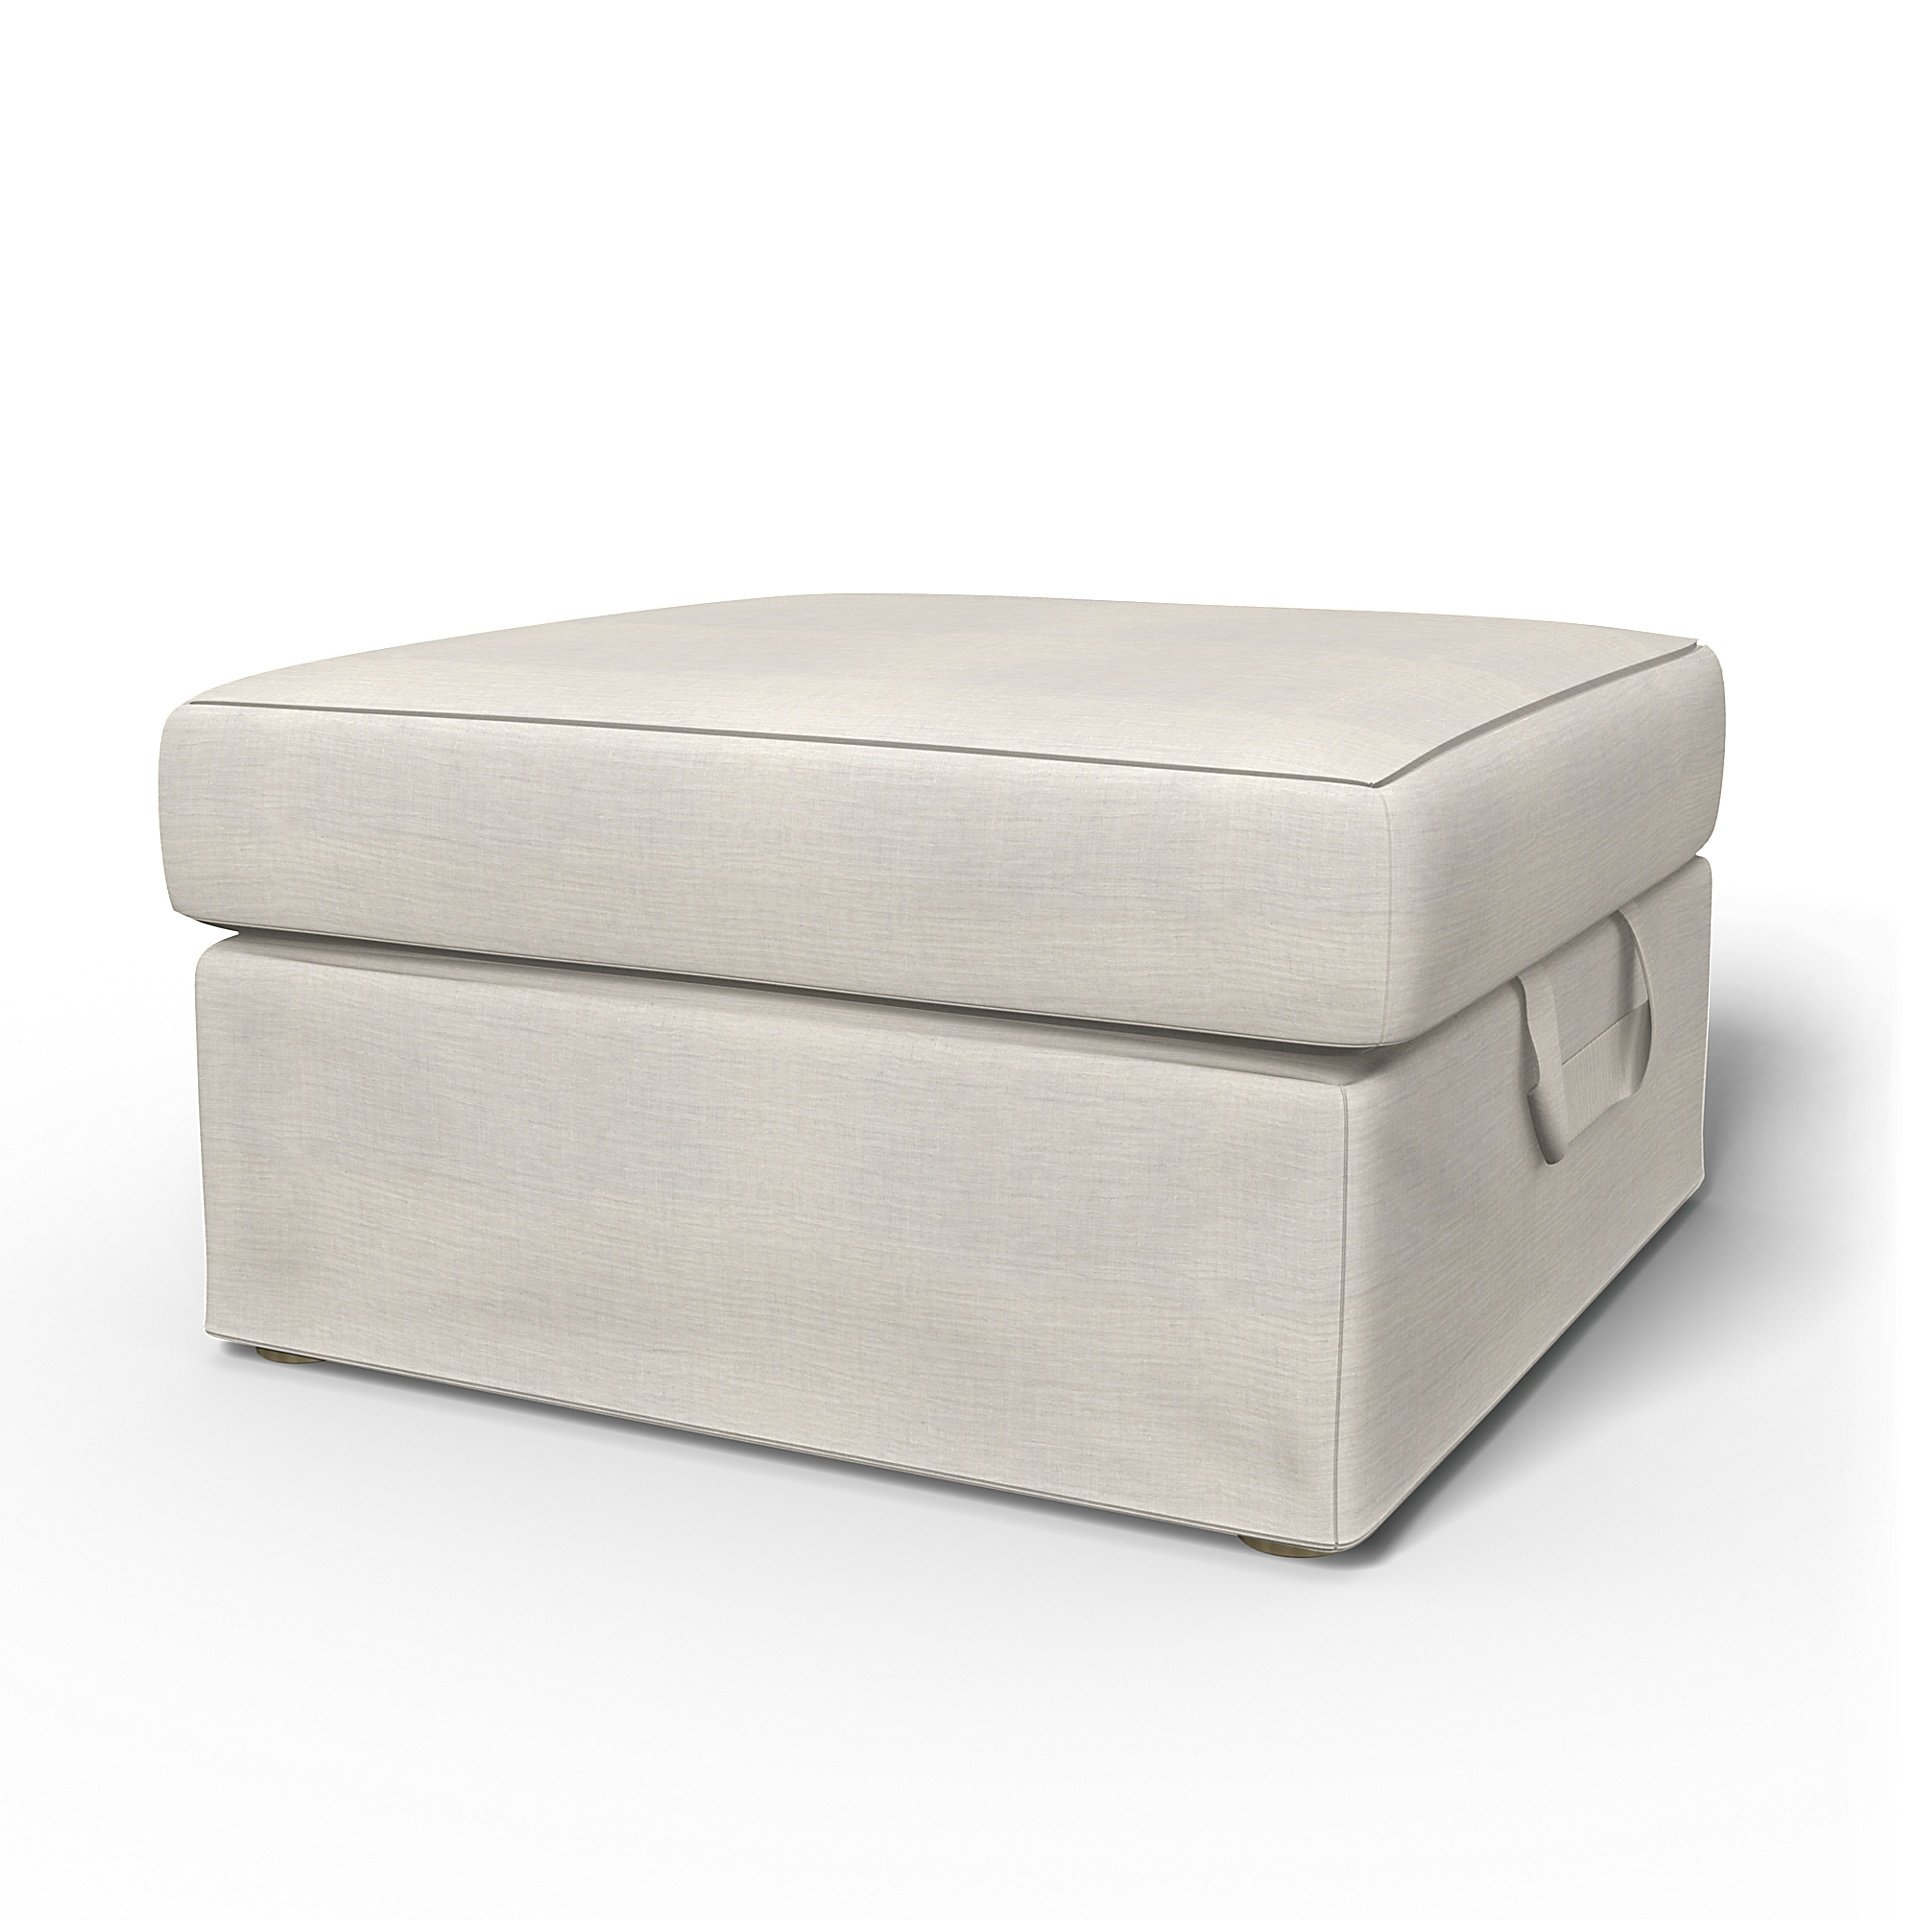 IKEA - Tomelilla Foto Footstool Cover, Soft White, Linen - Bemz